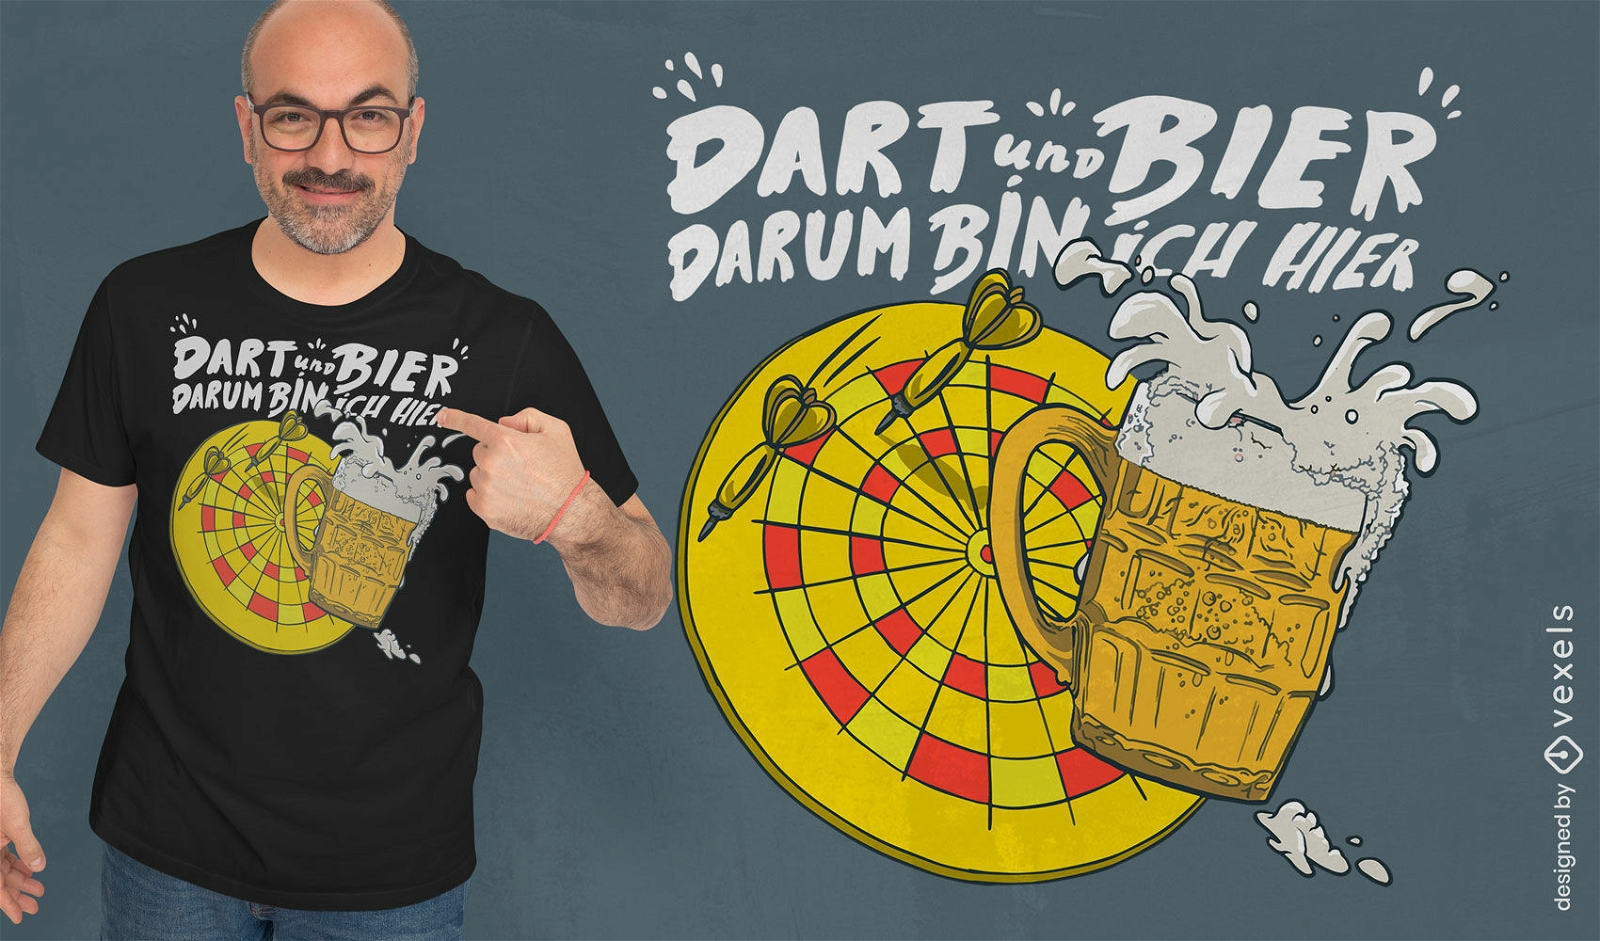 Darts and beer t-shirt design